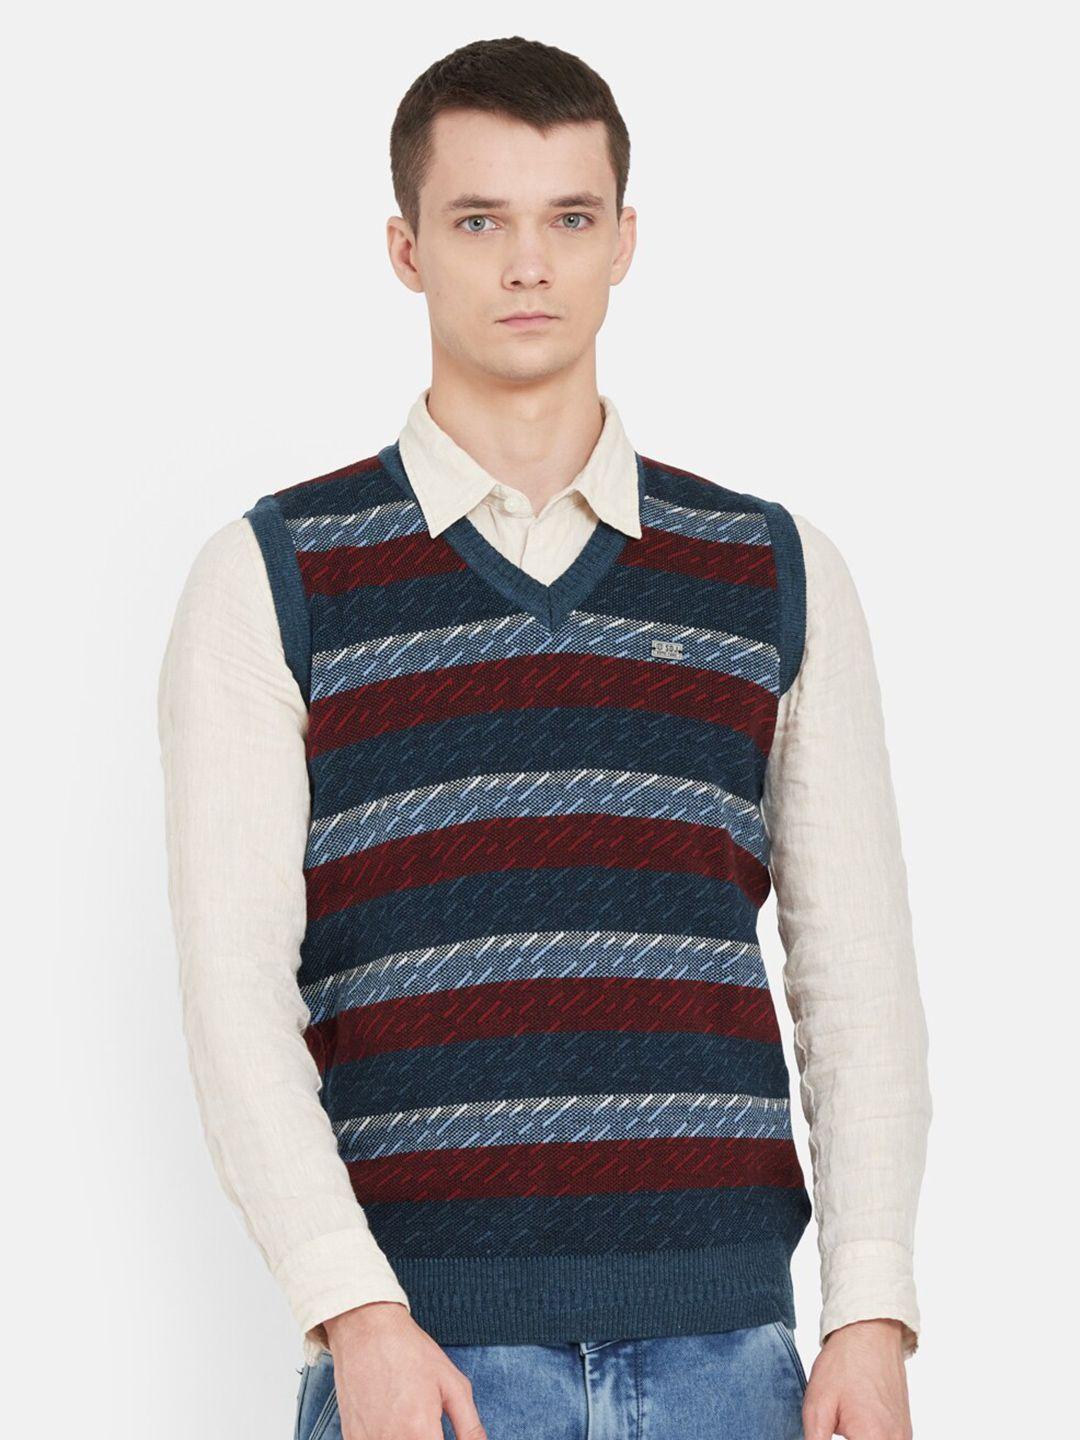 duke men teal & red striped sweater vest